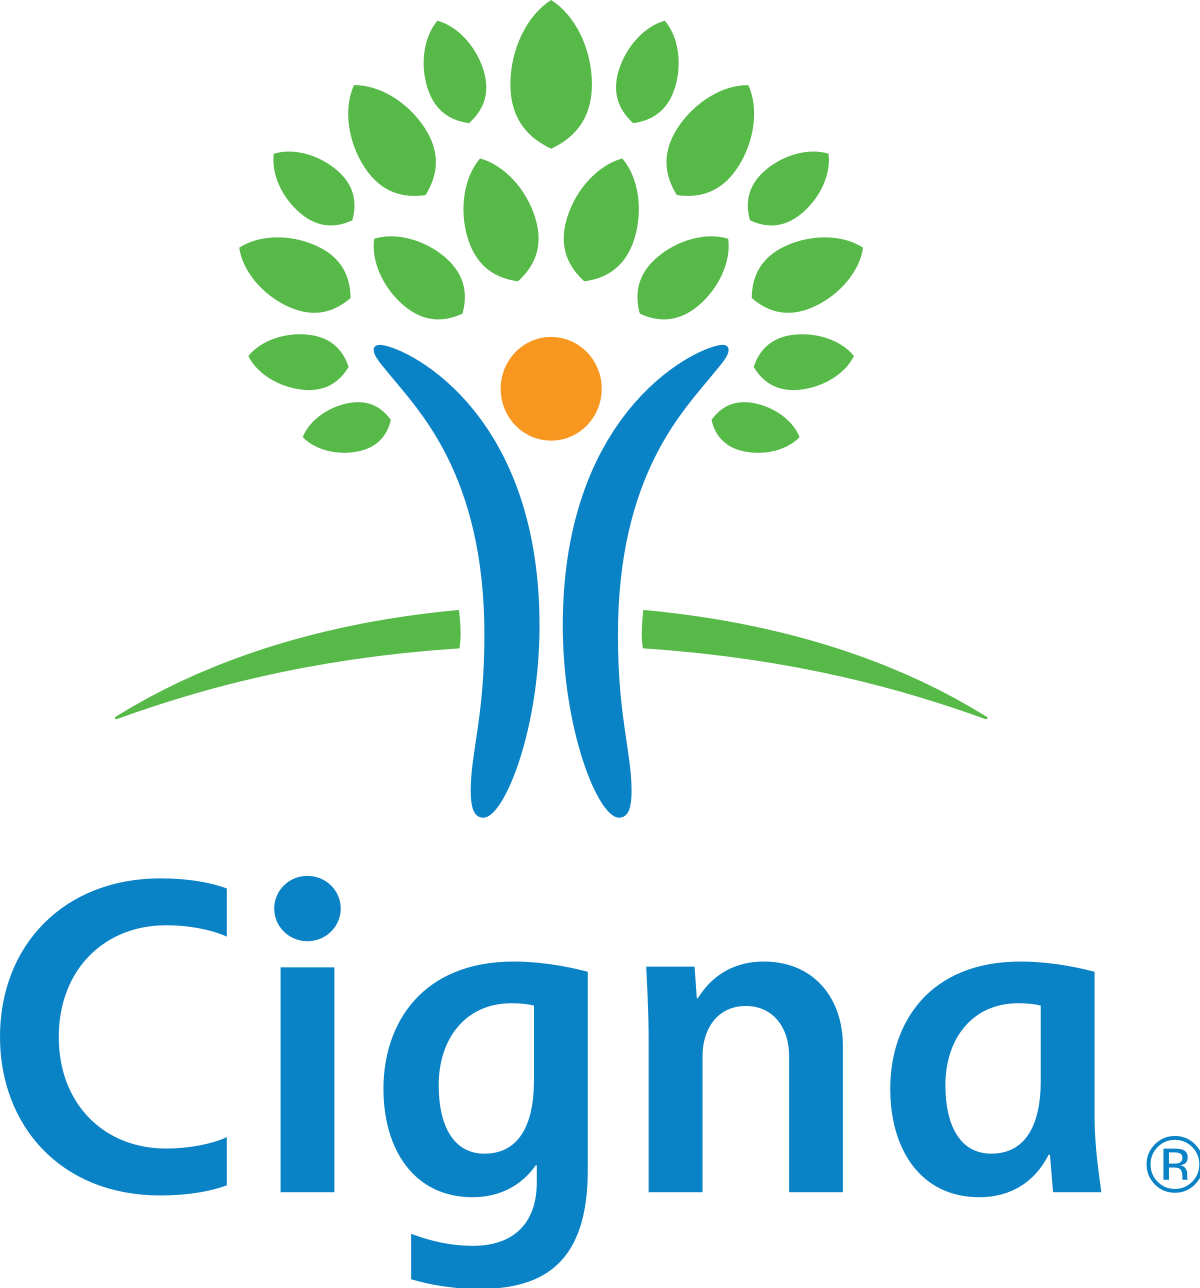 Cigna Group (The)